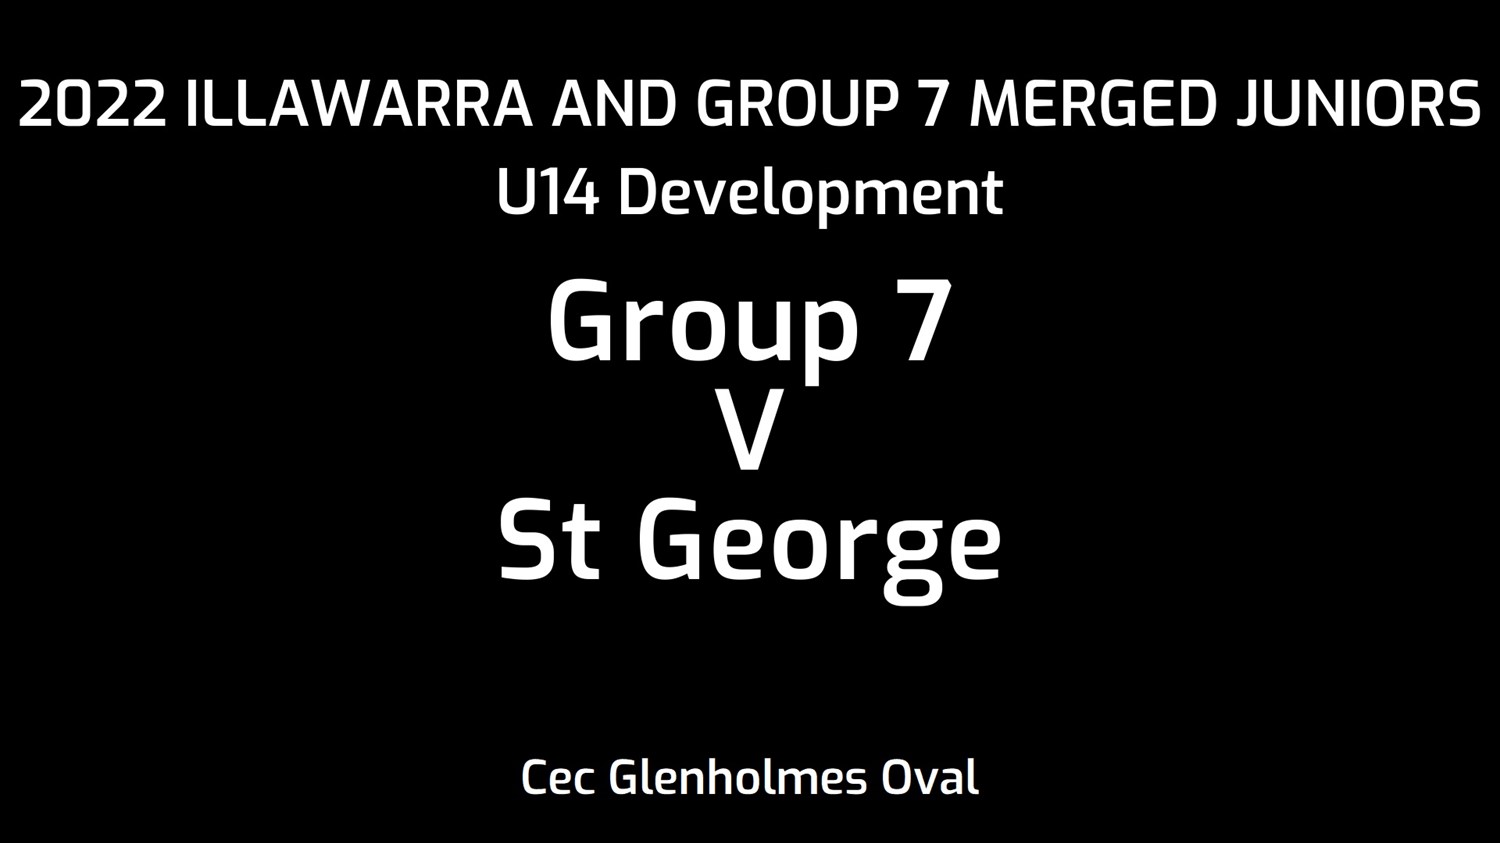 220924-Illawarra and Group 7 Merged Juniors U14 Development - Group 7 v St George Dragons Minigame Slate Image